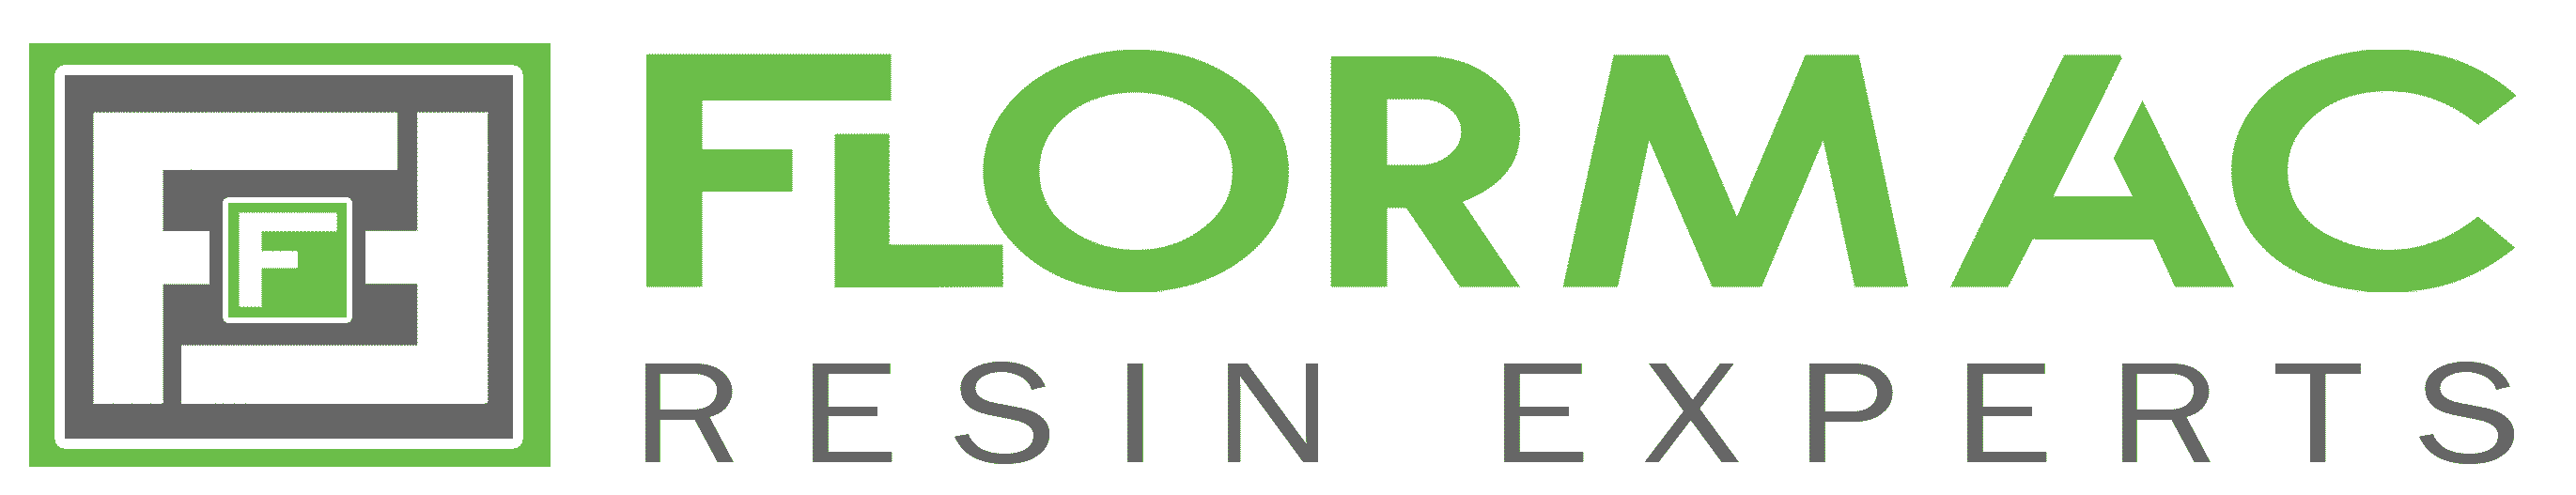 Flormac Resin Flooring Logo